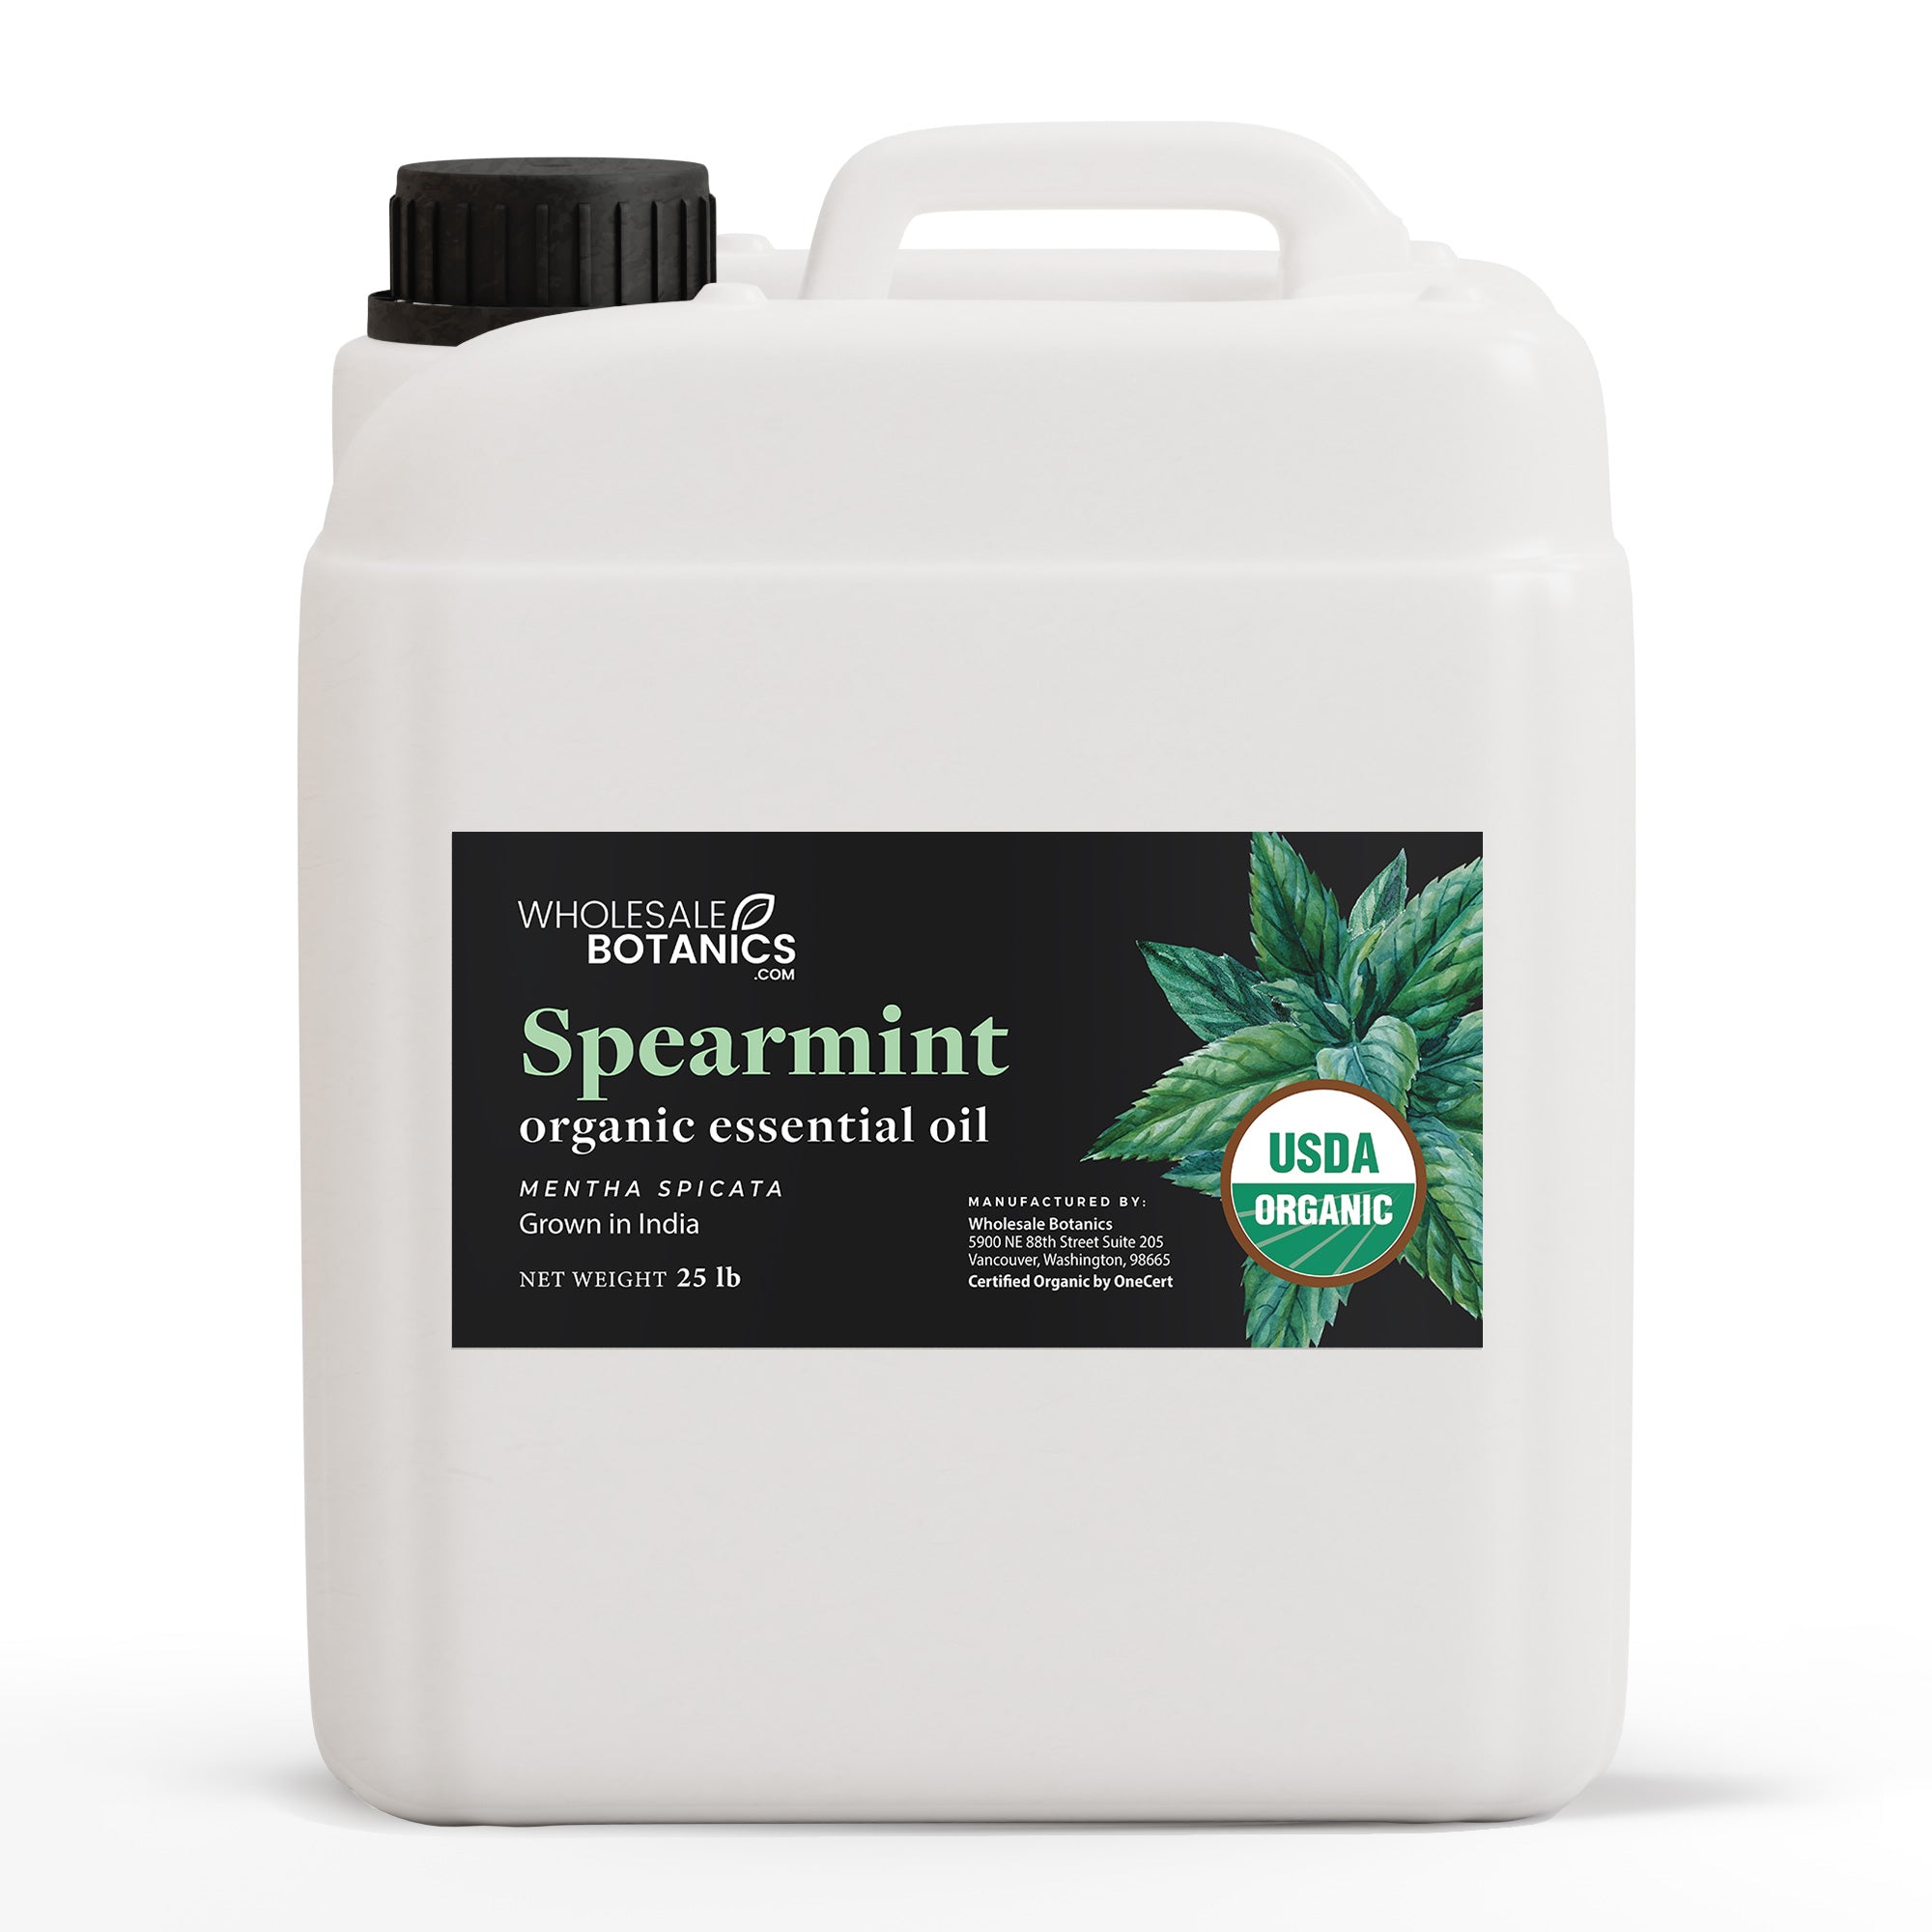 Organic Spearmint Essential Oil